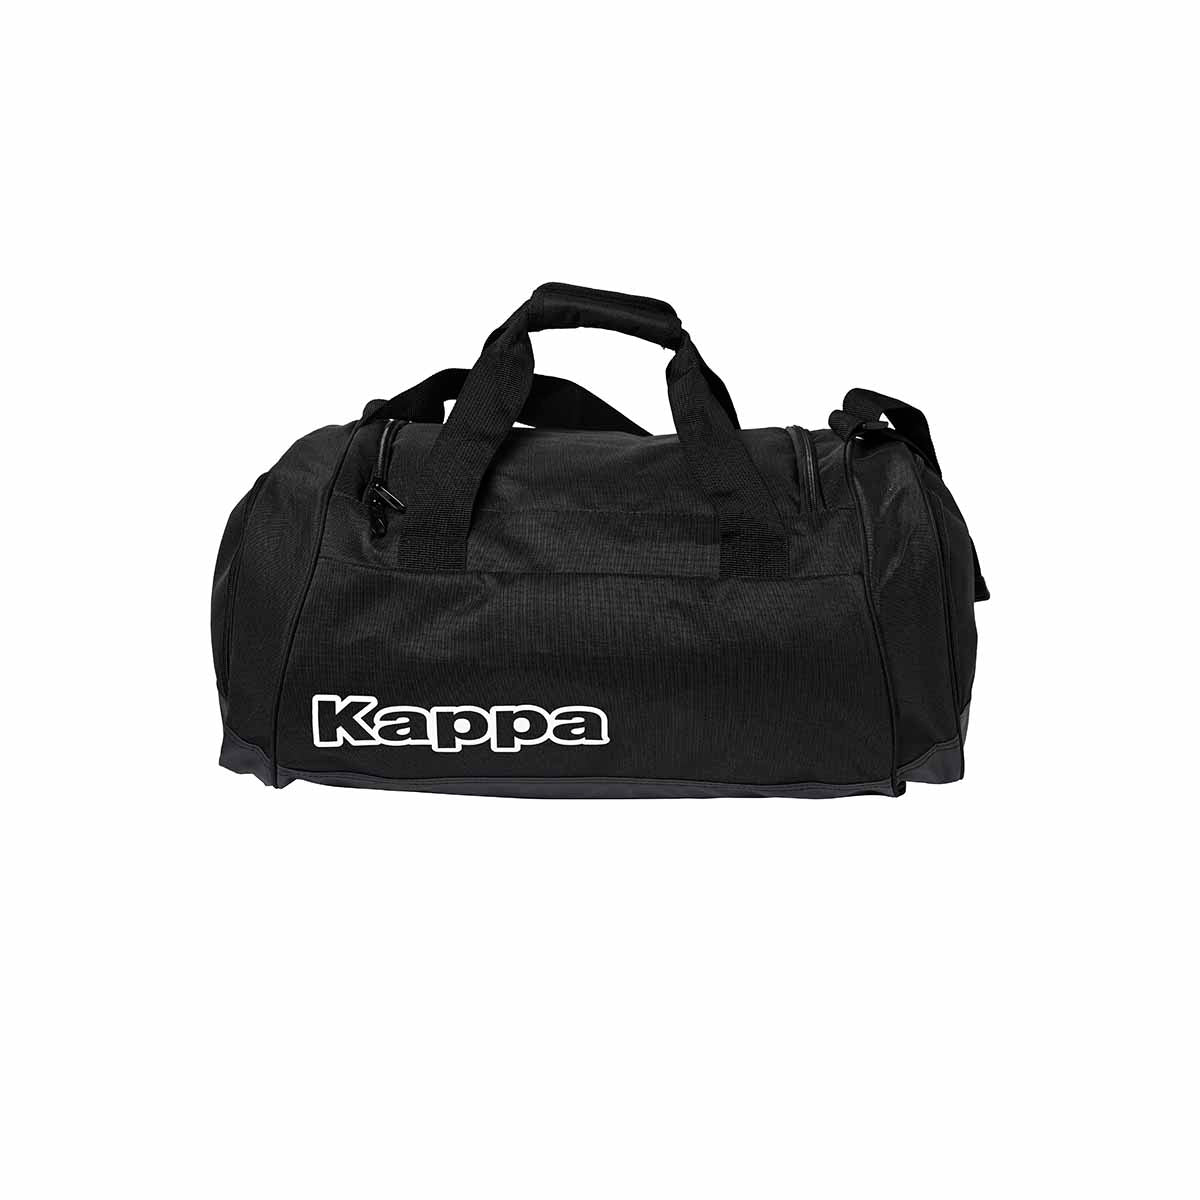 Omicron Delta Kappa Duffel Bag - Greek Gear